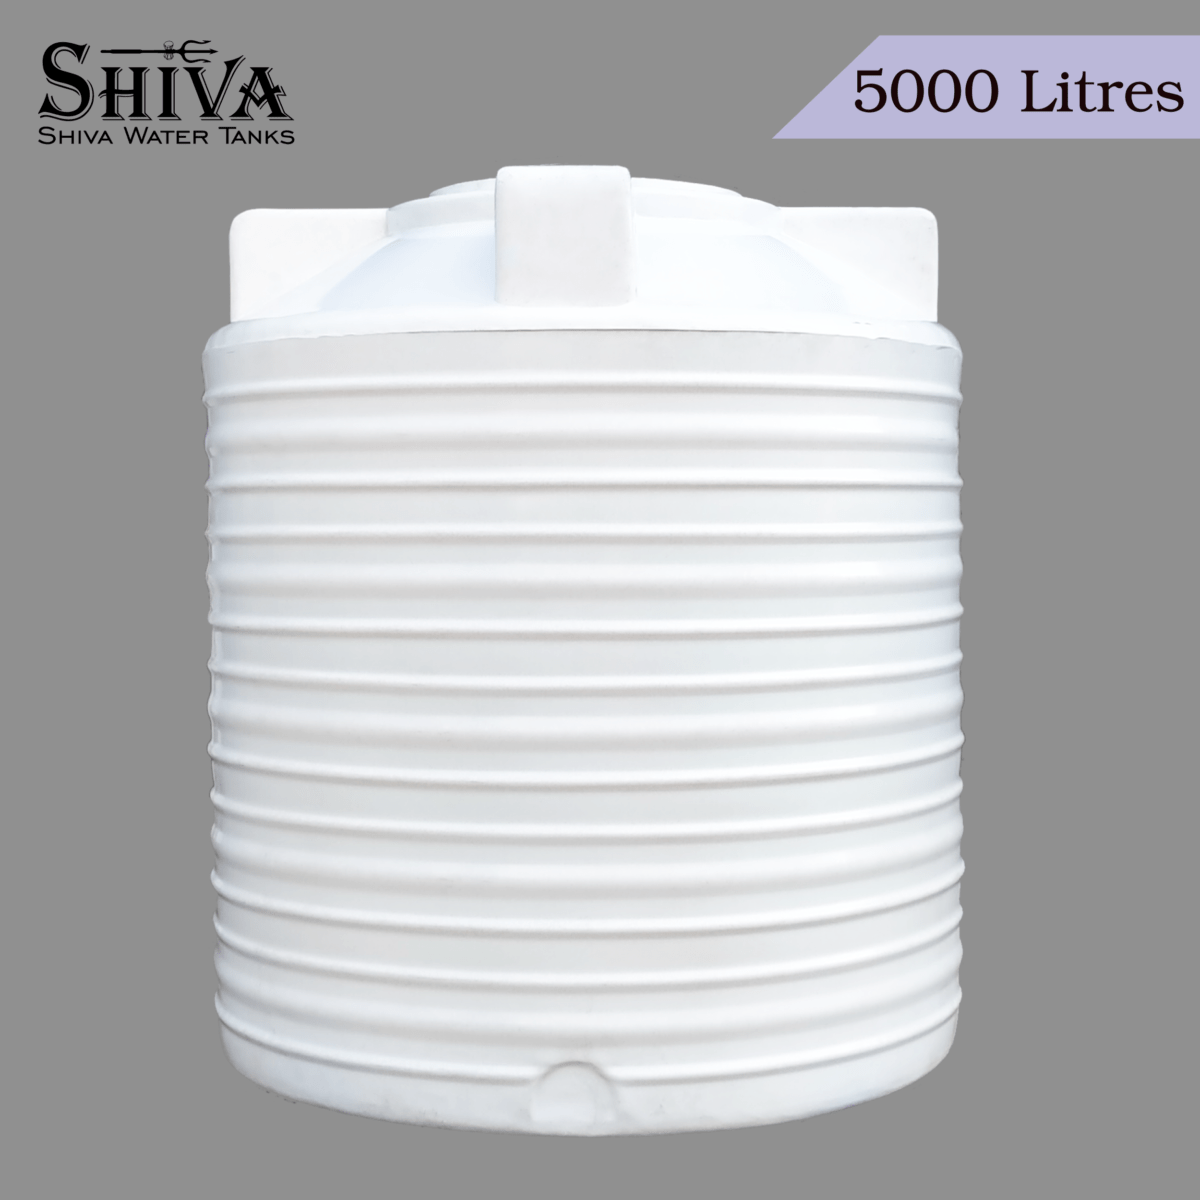 5000 Litres - SHIVA Plus - 3 Layers